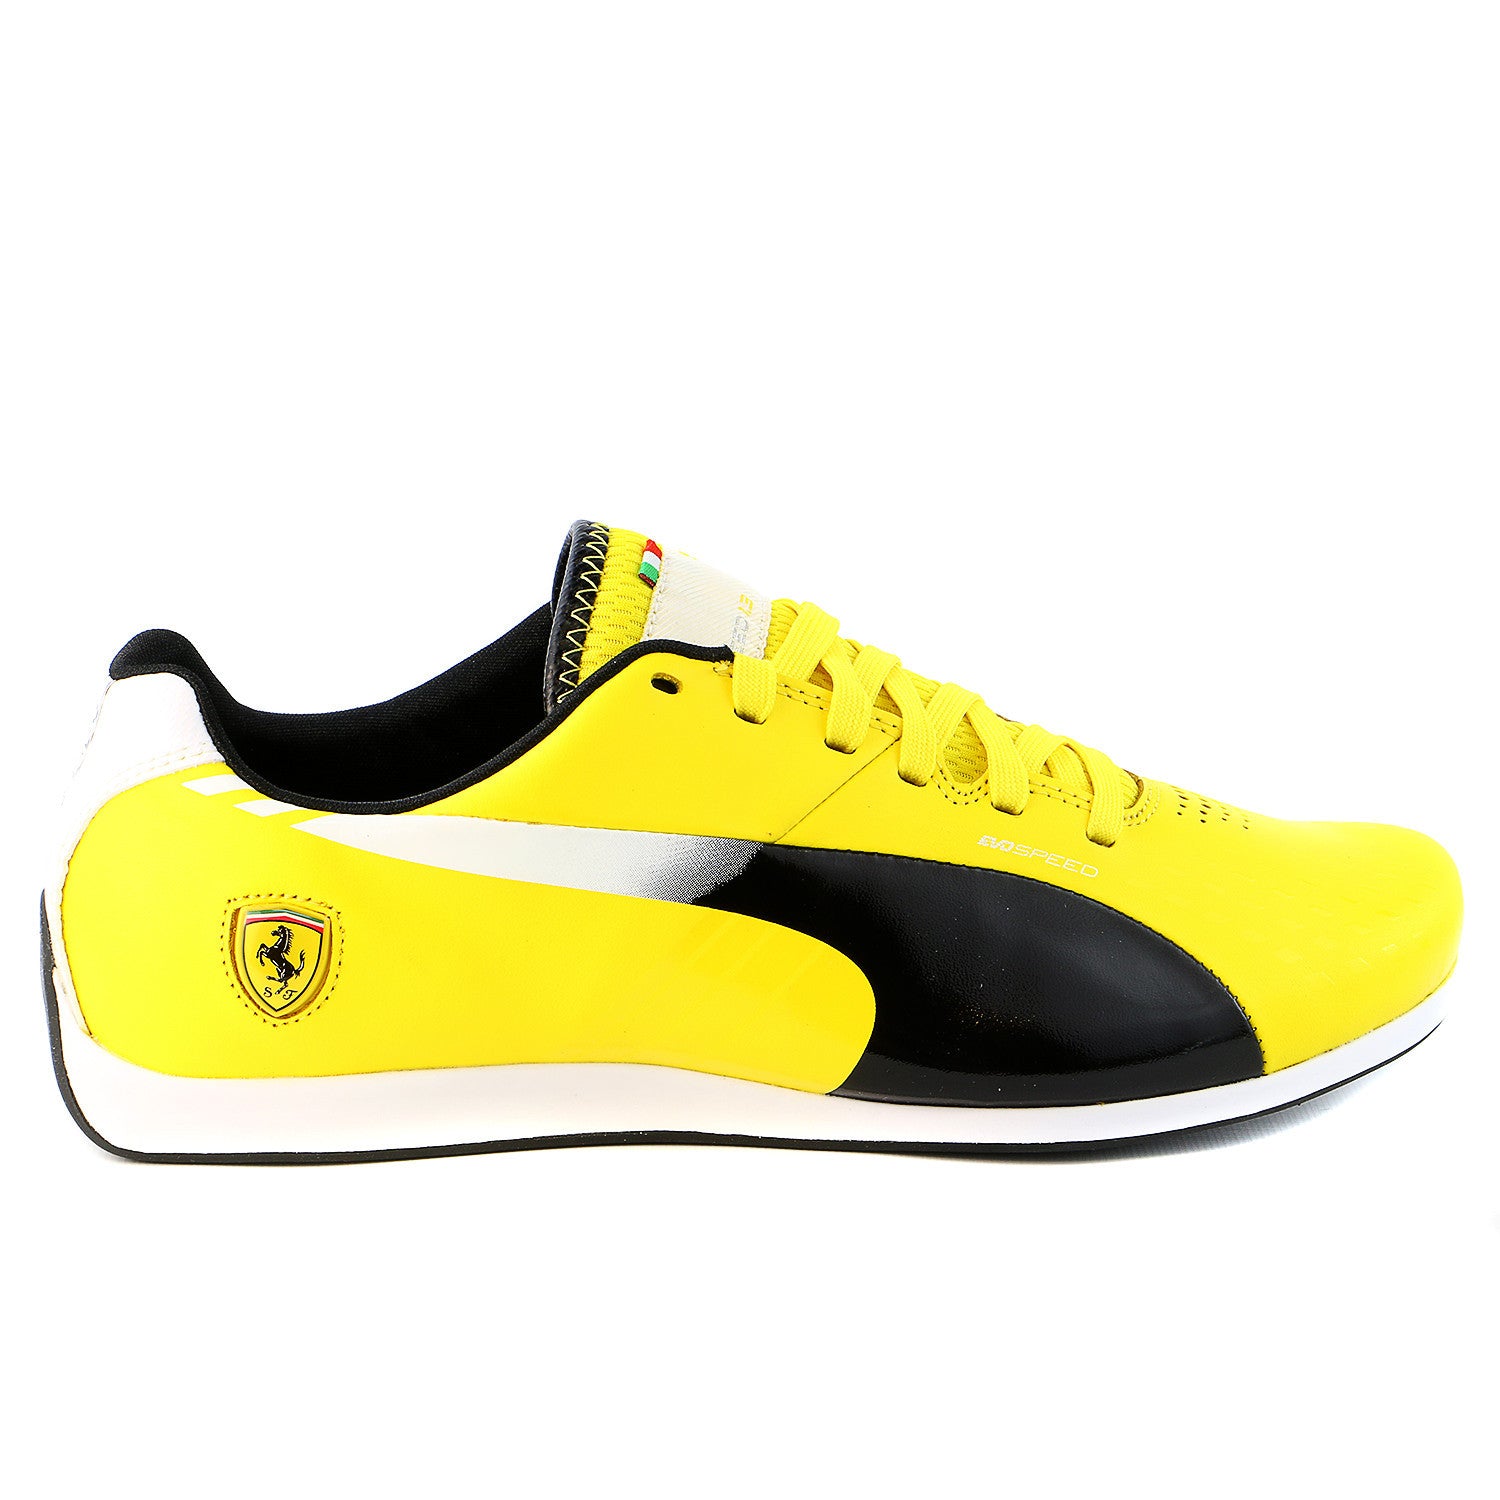 Evospeed 1.3 SF Volante Fashion Sneaker Motorsport Shoe - Vibrant Shoplifestyle